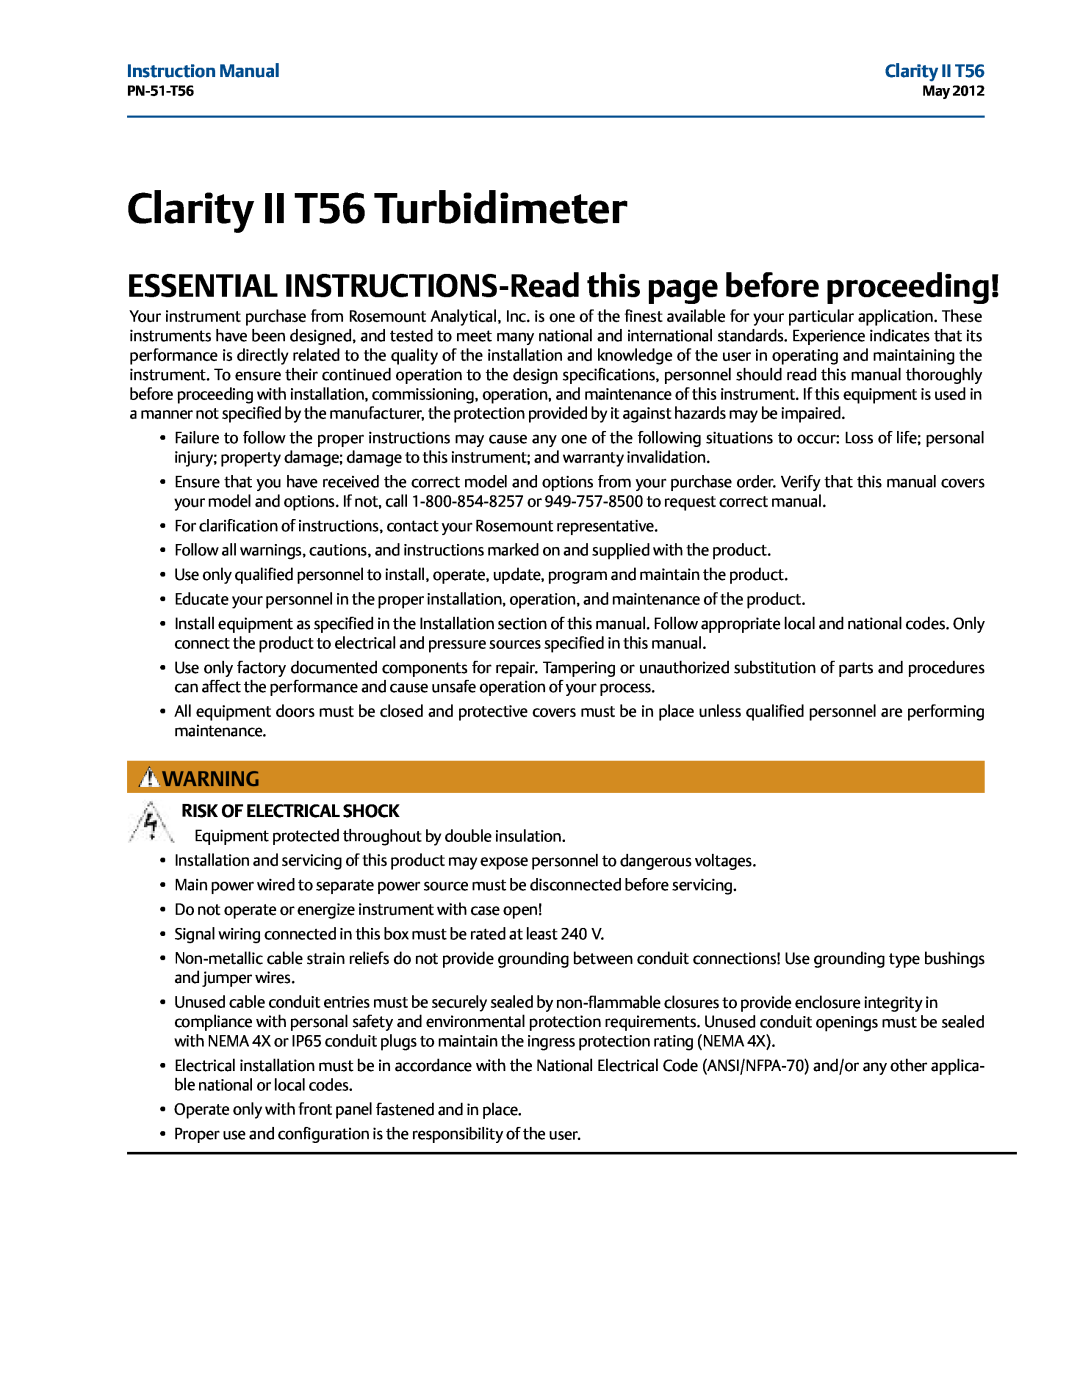 Emerson PN-51-T56 instruction manual Risk Of Electrical Shock, Clarity II T56 Turbidimeter 